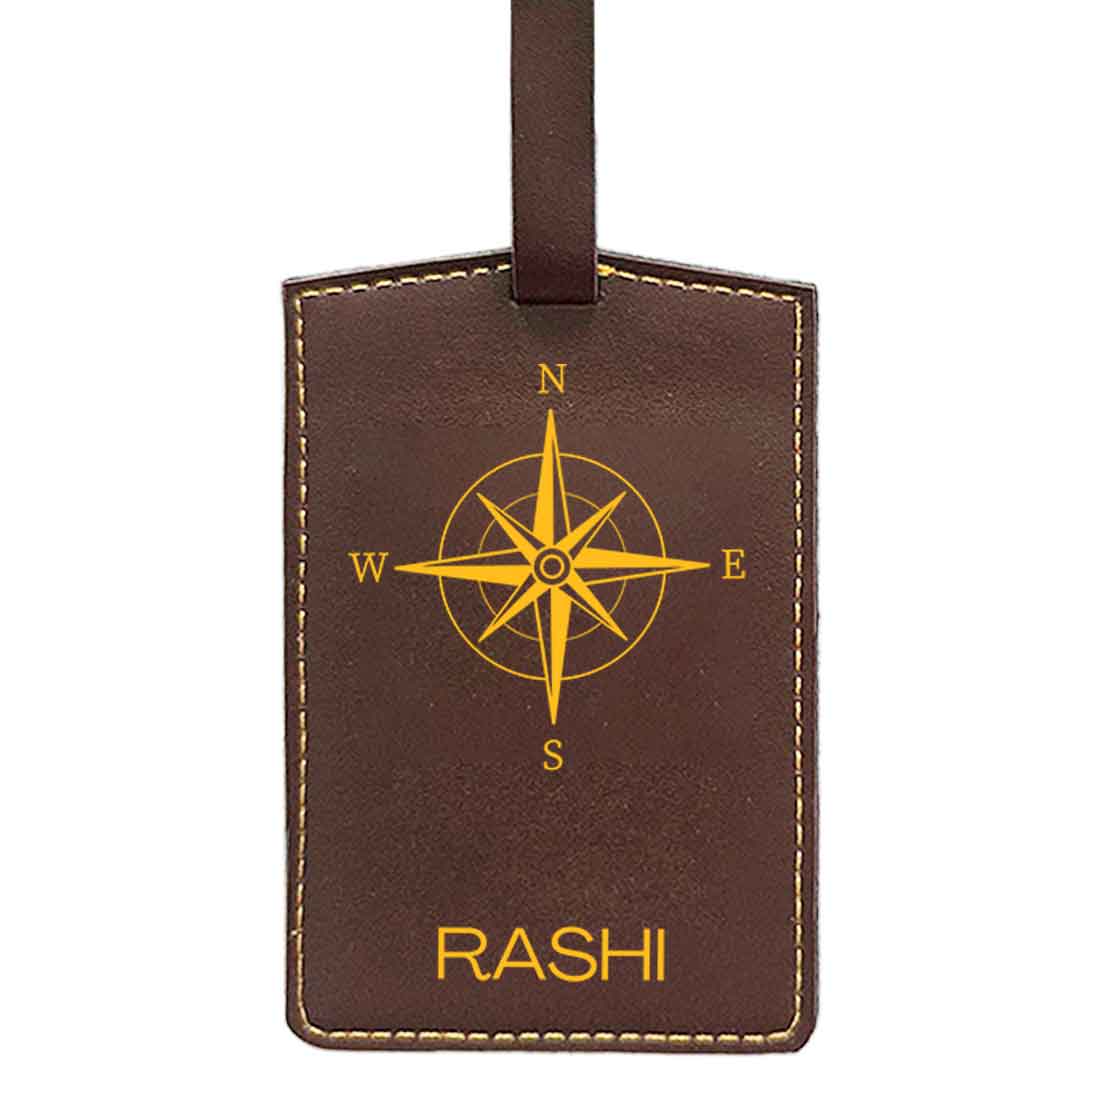 Customized Bag Name Tag Designer PU Leather Luggage Tags